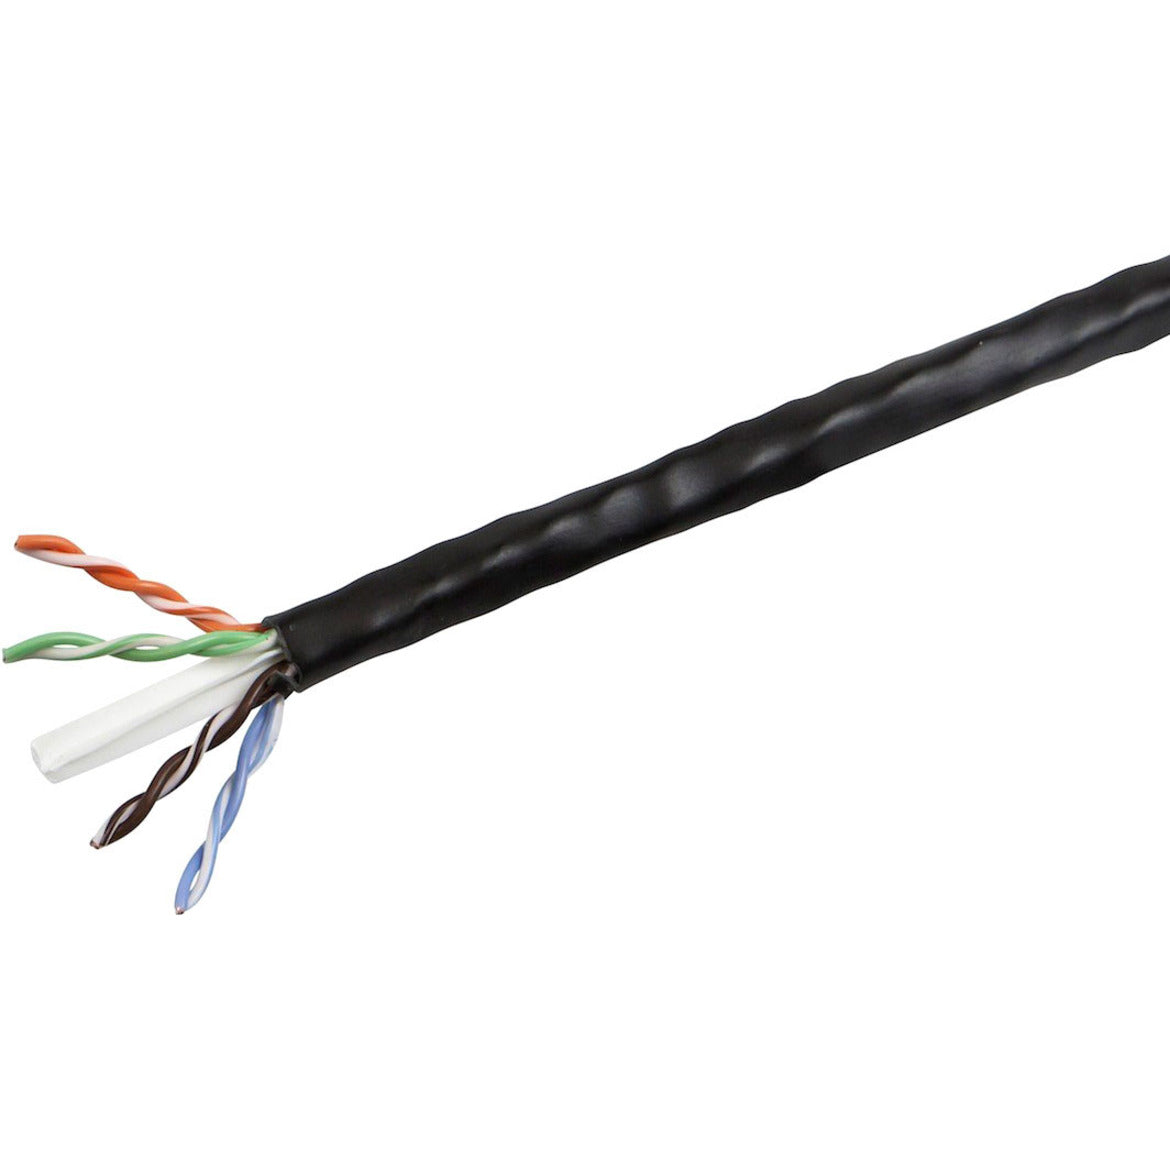 Monoprice 12807 Cat. 6 UTP Network Cable, 1000 ft, Black